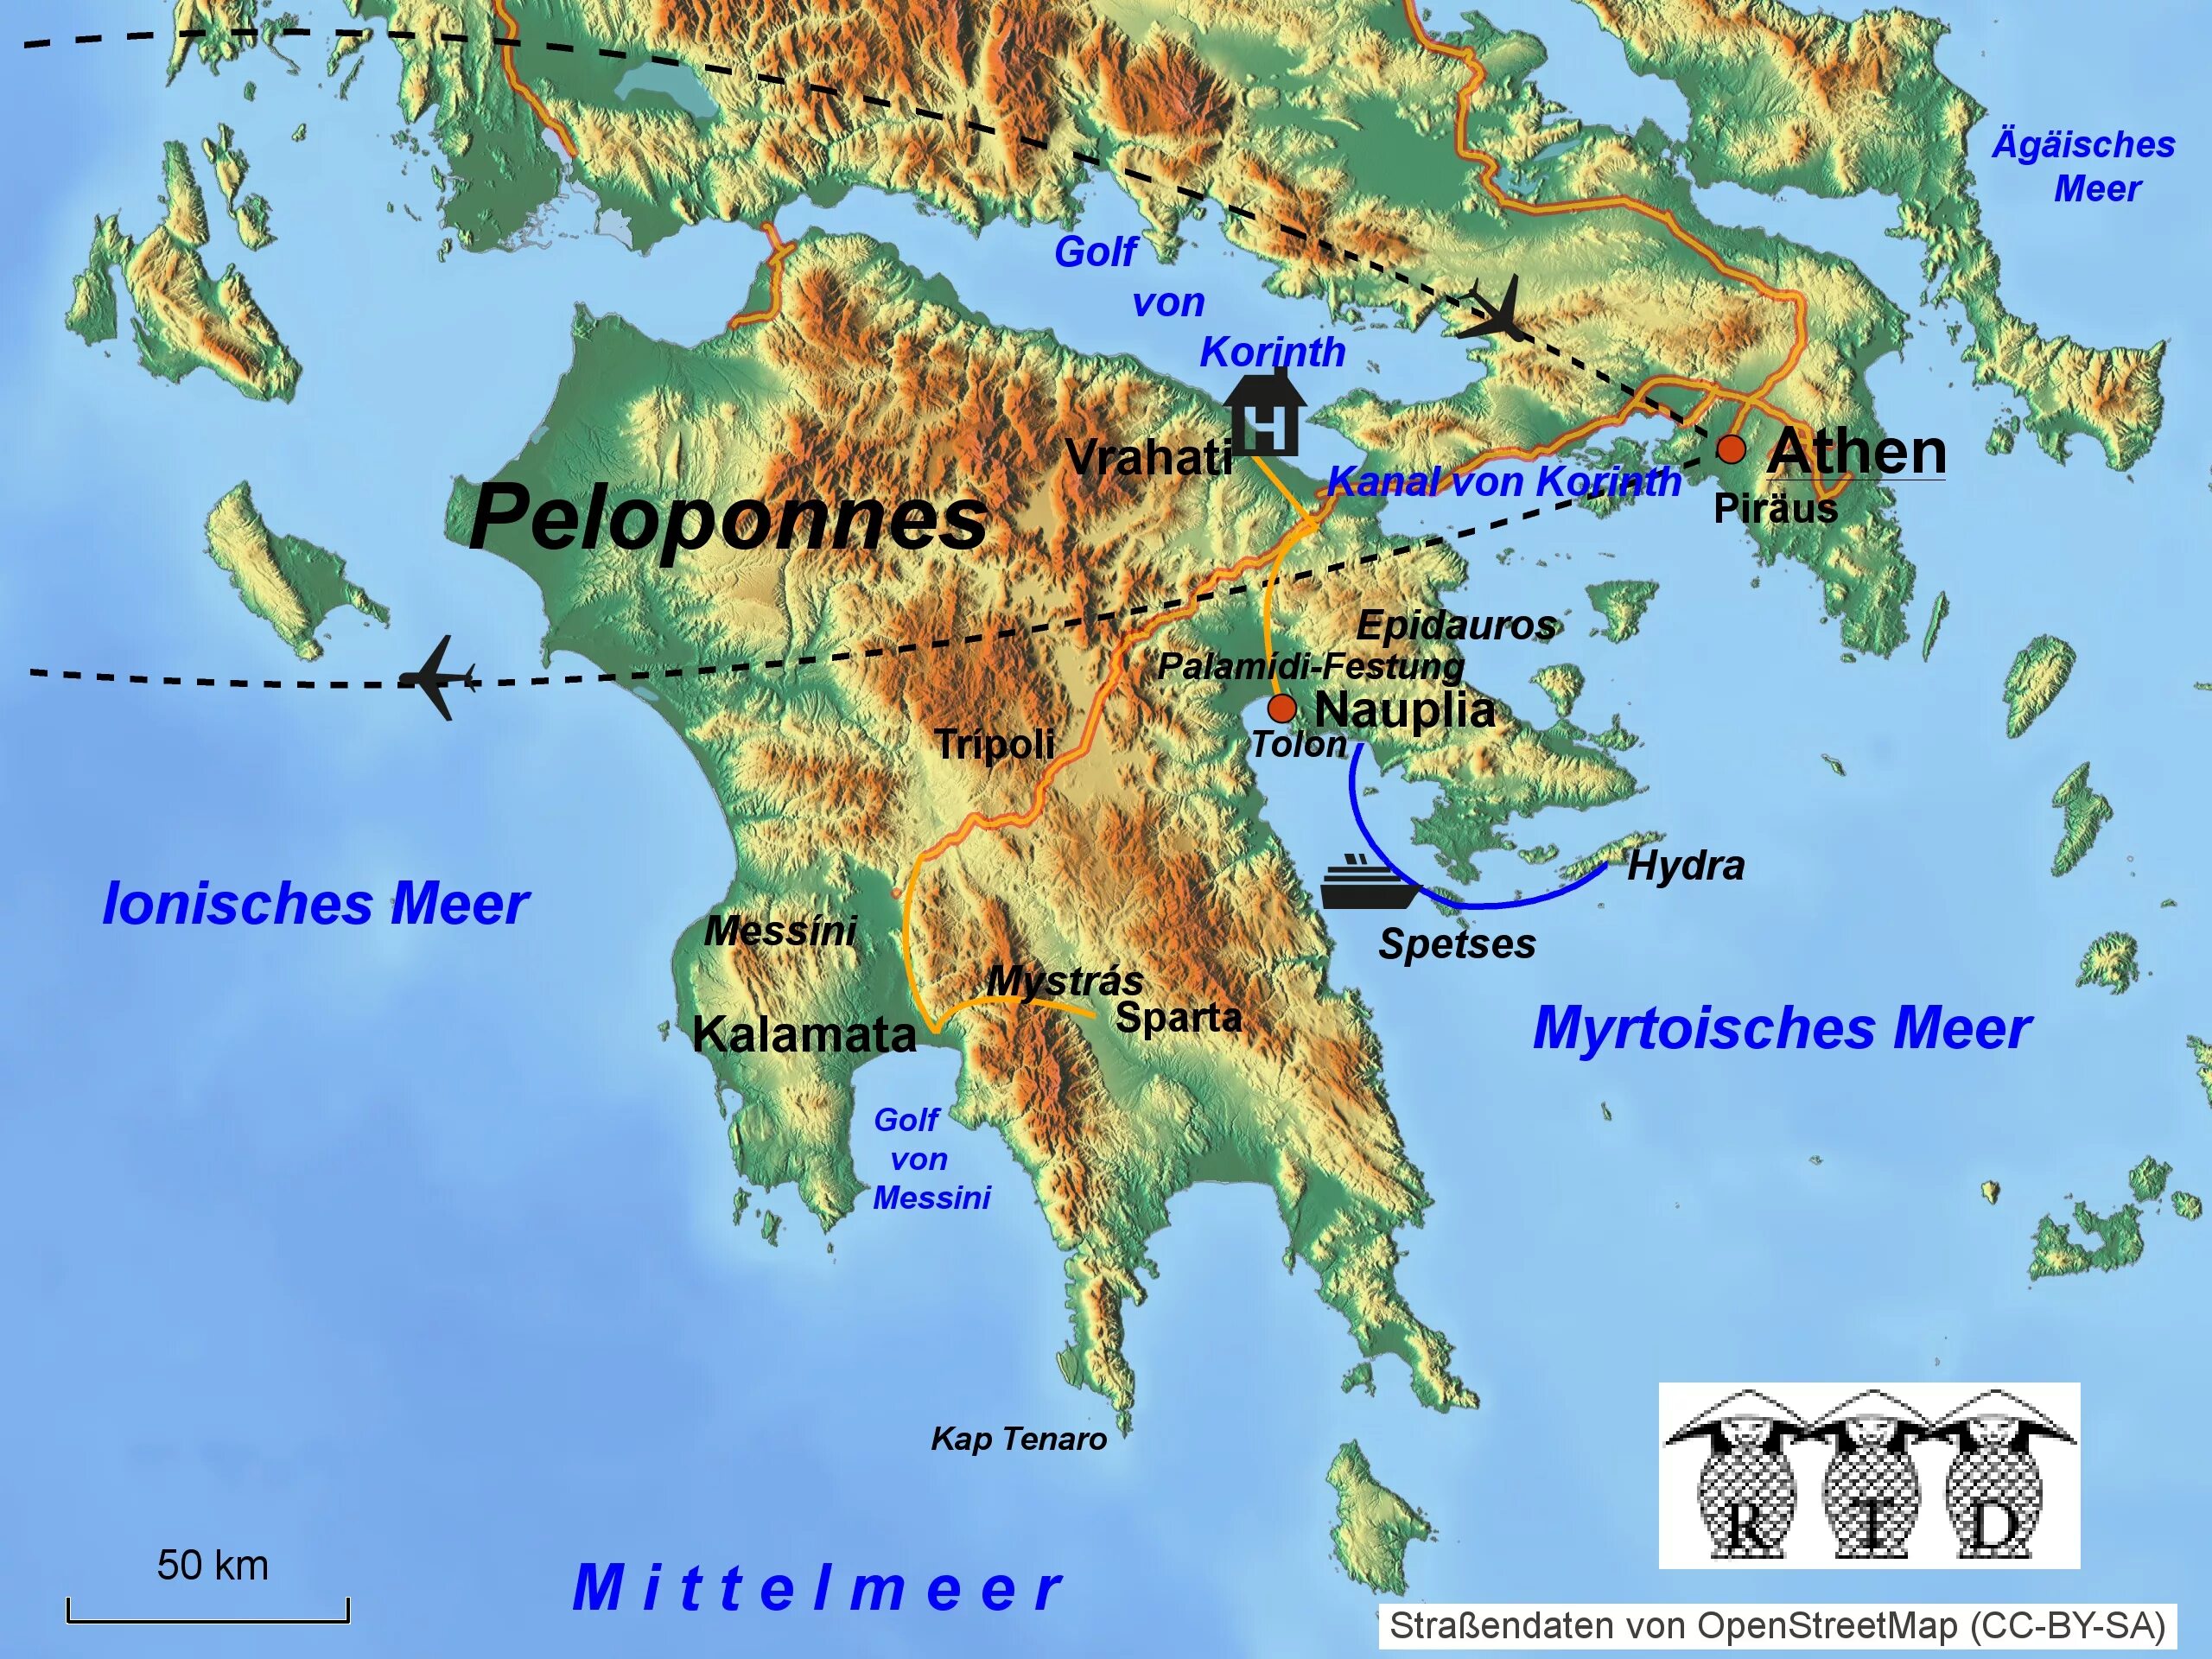 Древний город спарта на контурной карте. Пелопоннес в древней Греции. Пелопоннес на карте древней Греции. Полуостров Пелопоннес на карте древней Греции. Полуостров Пелопоннес на карте.